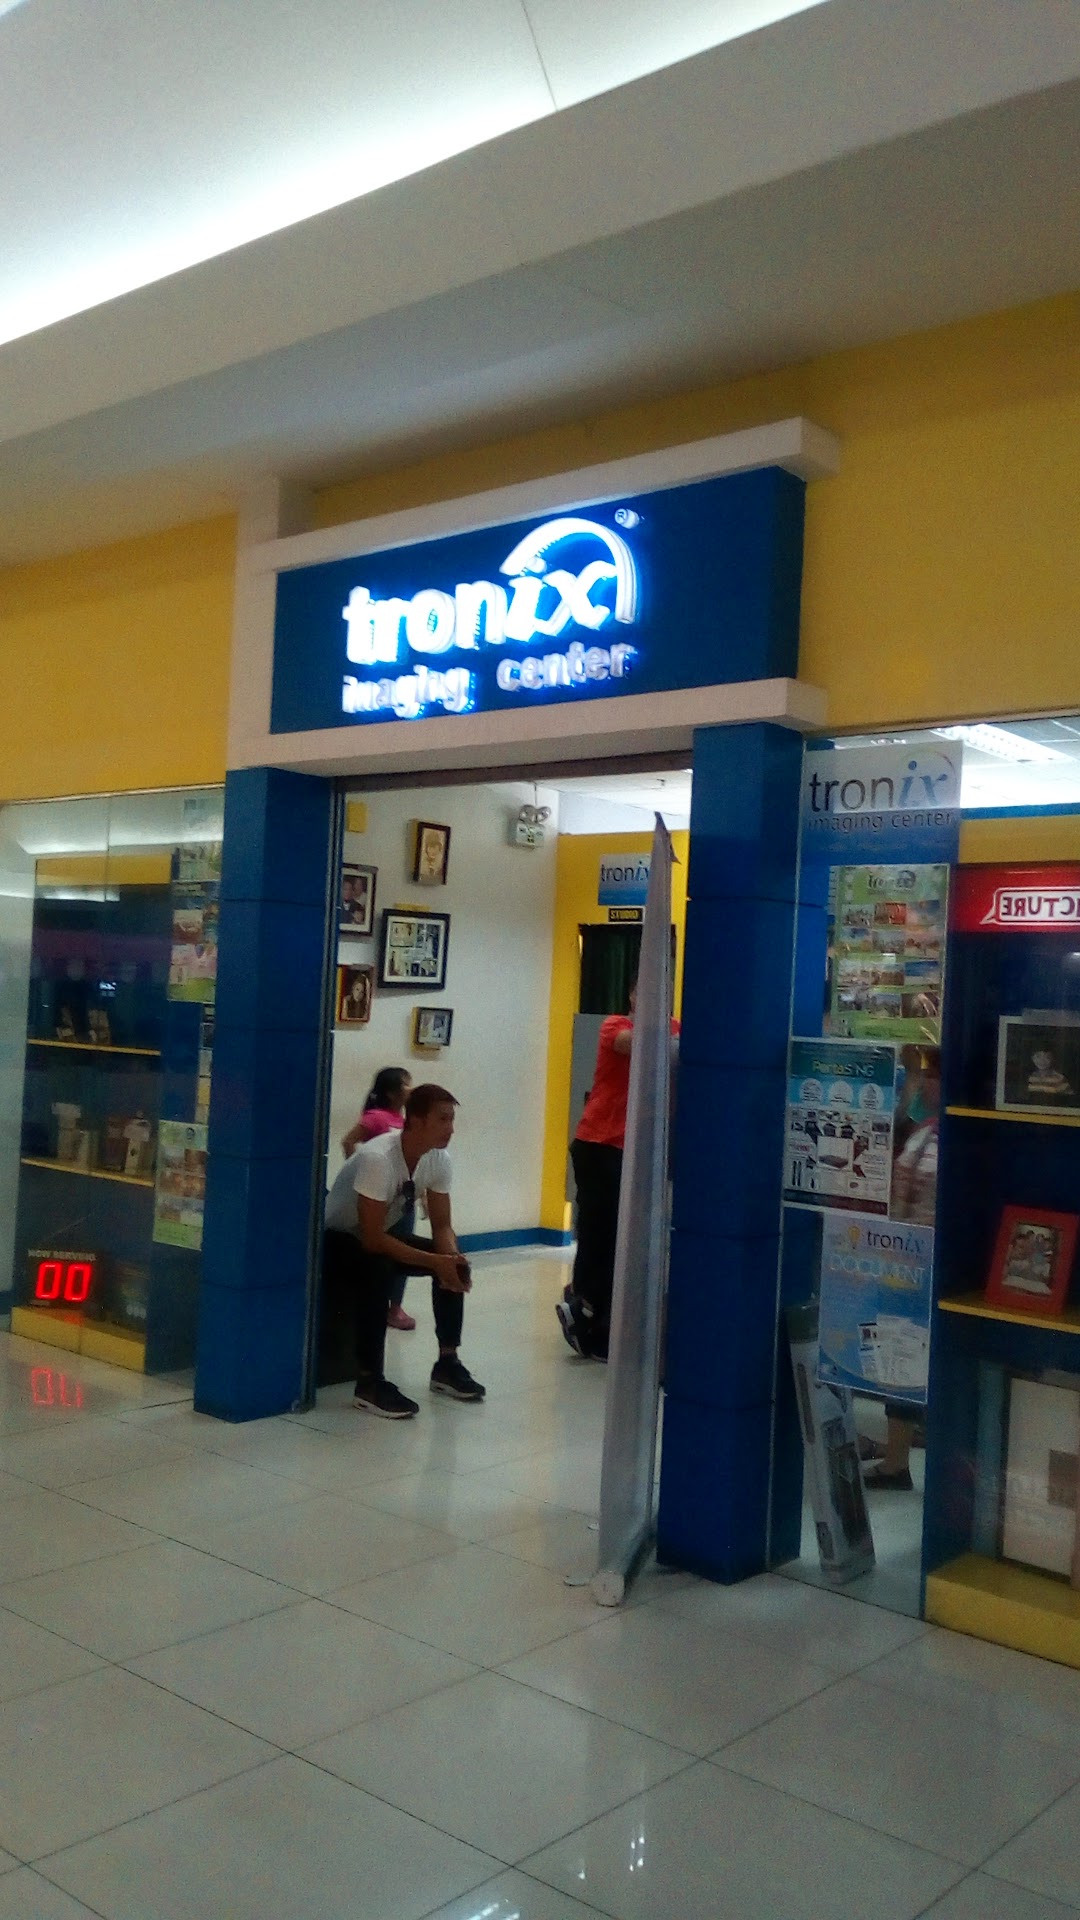 Tronix Imaging Center